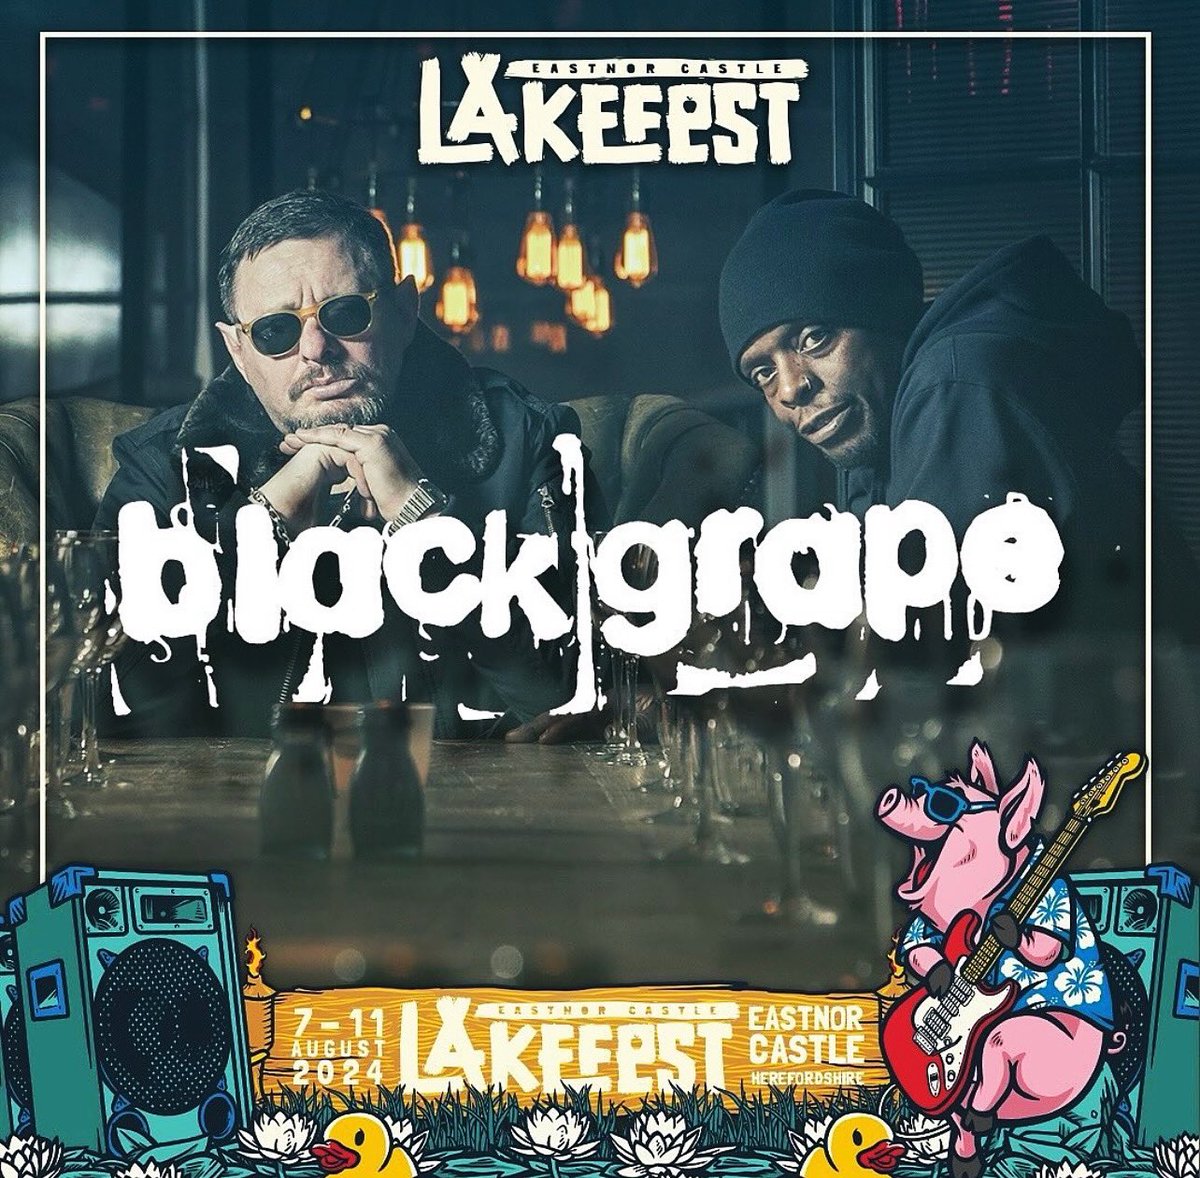 BLACK GRAPE play Lakefest in Herefordshire on Friday 9th August!! 🙌🏻🥳⭐️🍇 . Tickets 👇🏻 lakefest.co.uk/buy-tickets/ . #BlackGrape #ShaunRyder #KermitLeveridge #Lakefest2024 #Herefordshire #MusicFestival #EastnorCastle #Livemusic @Lakefestuk